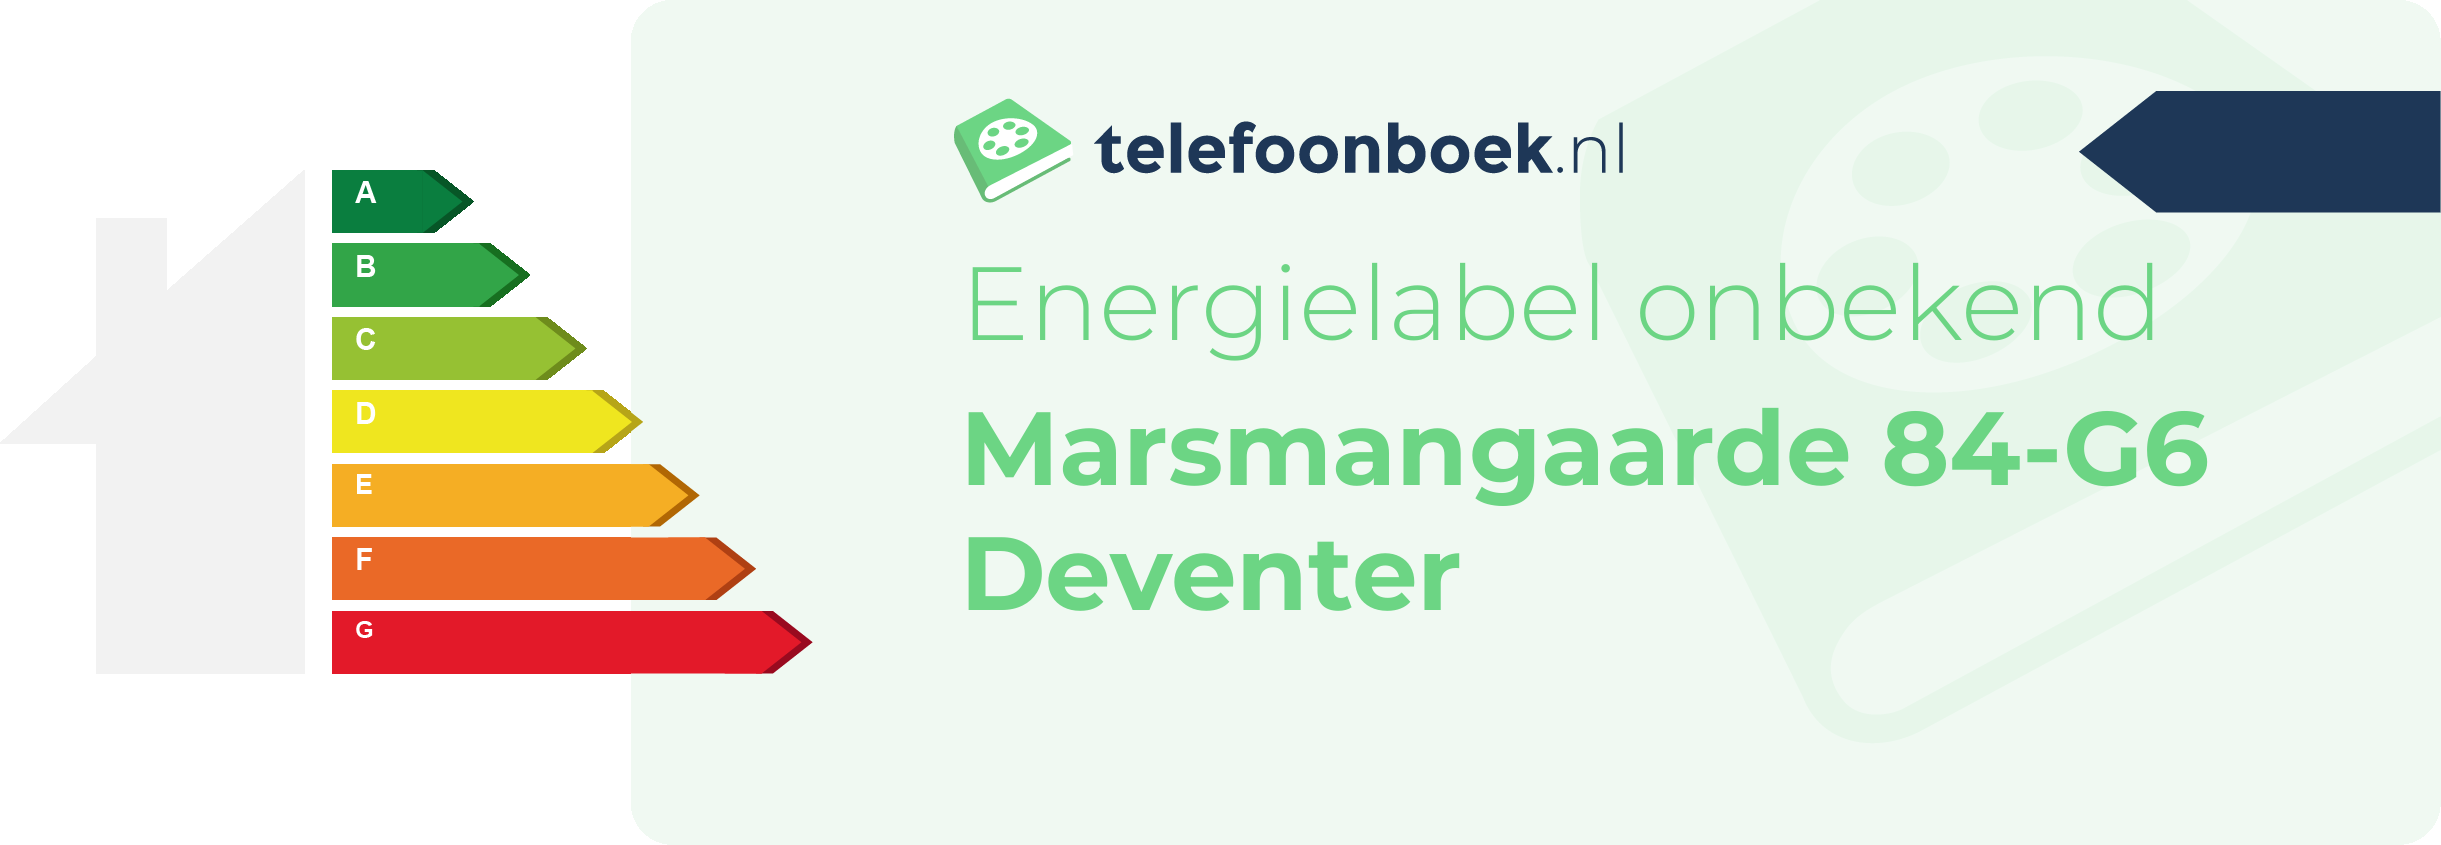 Energielabel Marsmangaarde 84-G6 Deventer